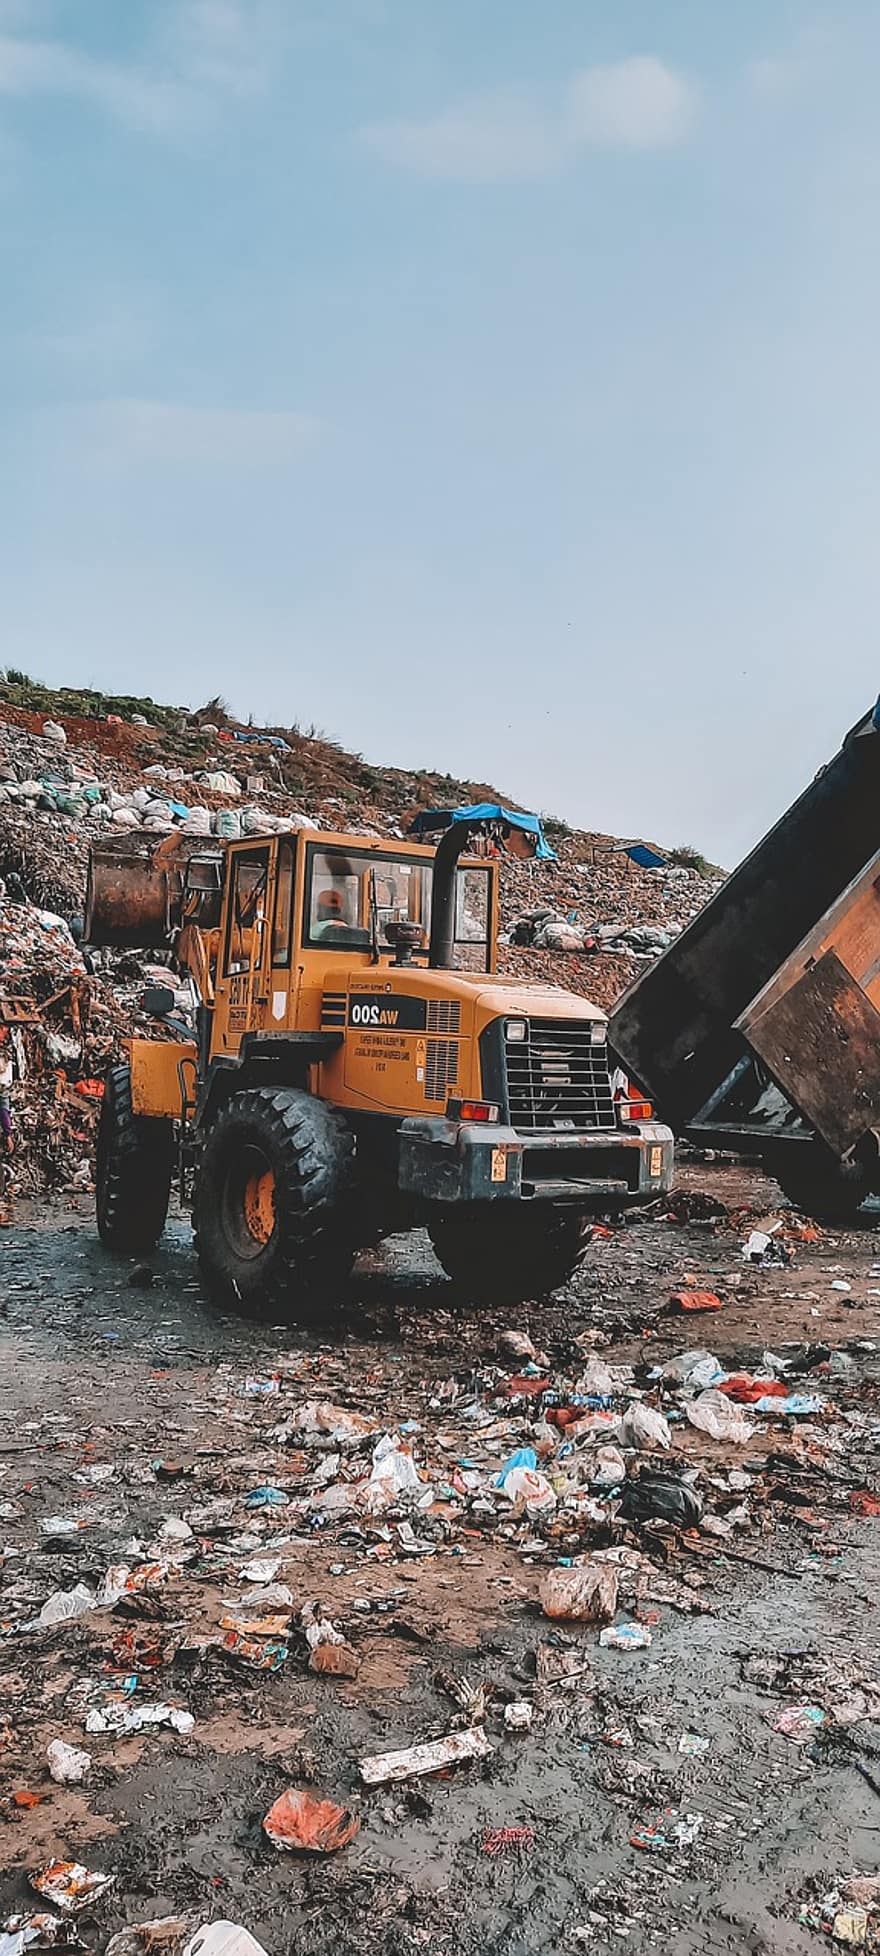 Tractor, Dump Site, Truck, Dump Truck, Vehicle, Trash Dump, Bantar Gebang, Indonesia, Trash, Junk, Tpa Bantargebang